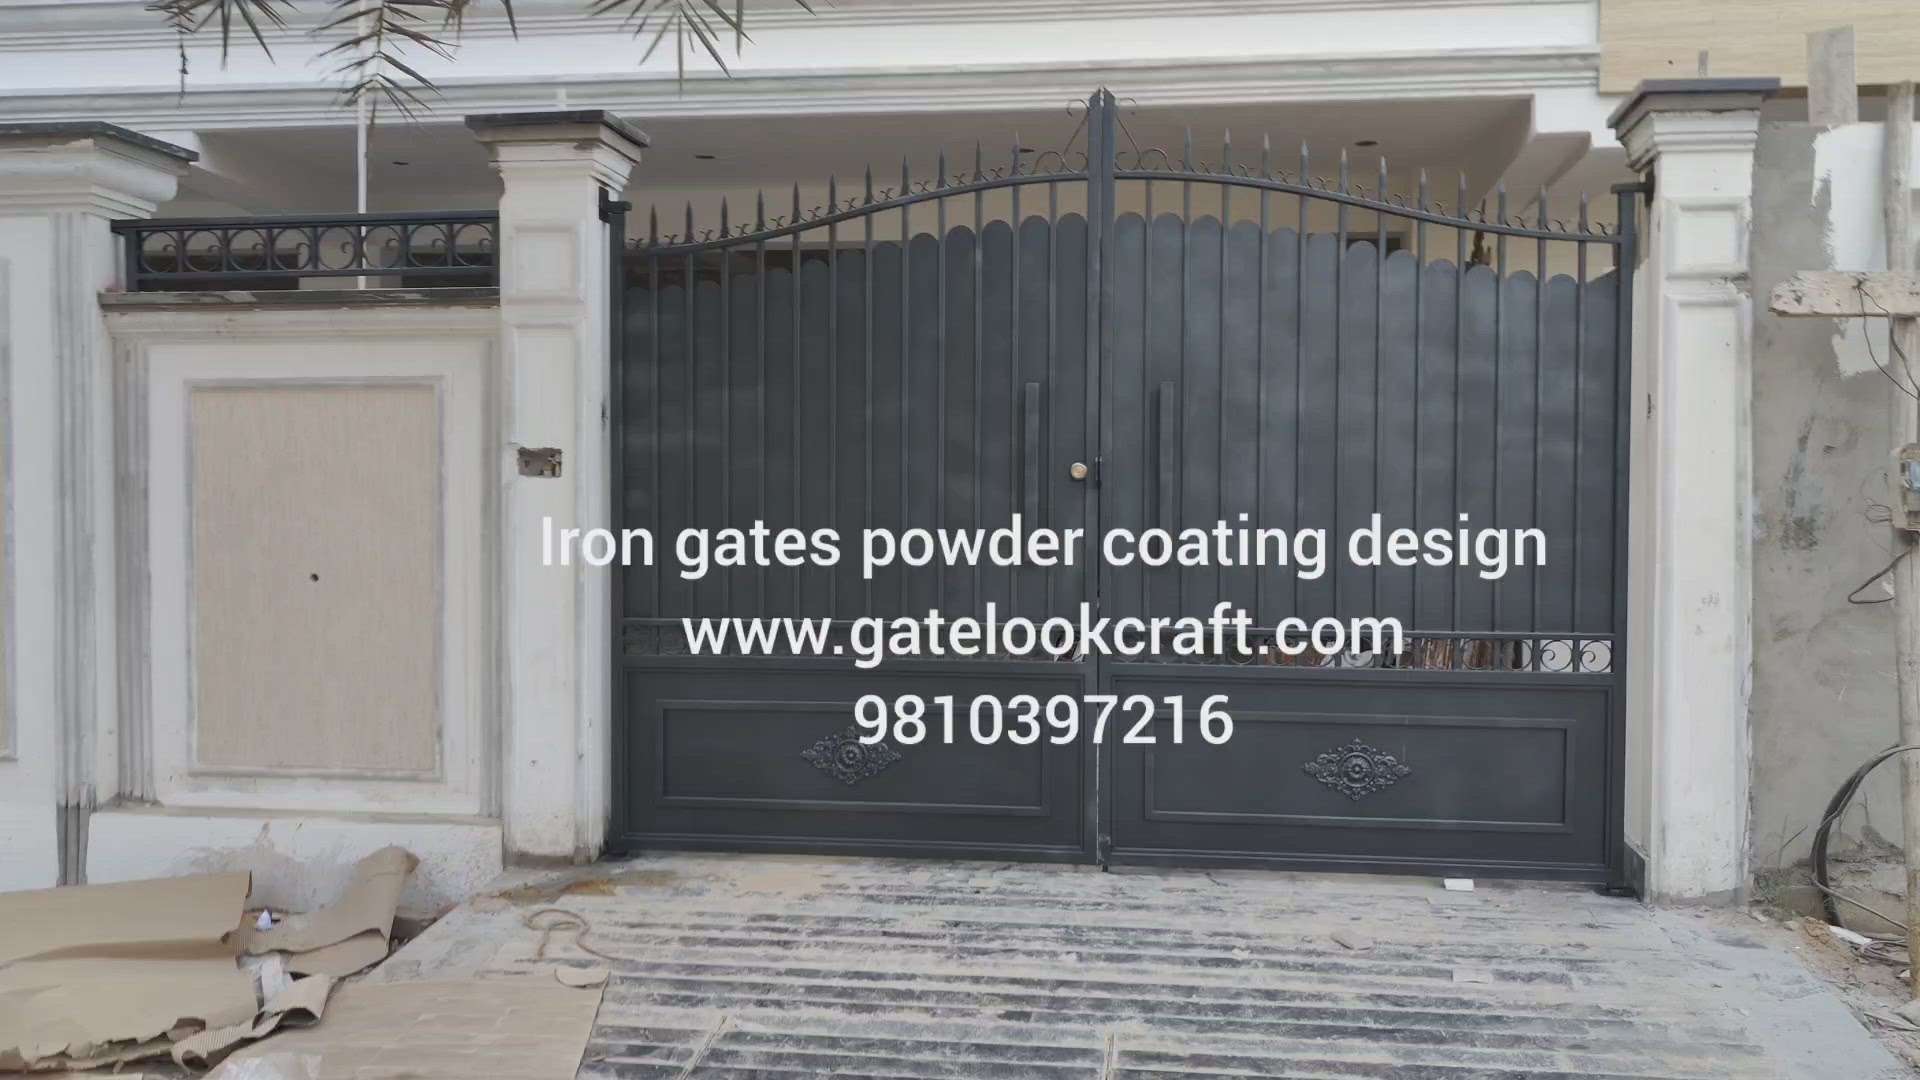 Iron gates powder coating design by Hibza sterling interiors pvt ltd #gatelookcraft  #irongates #msgates #maingates #gatedesign #modulargate #aluminiumgates #aluminiumprofilegates #irongatepowdercoating